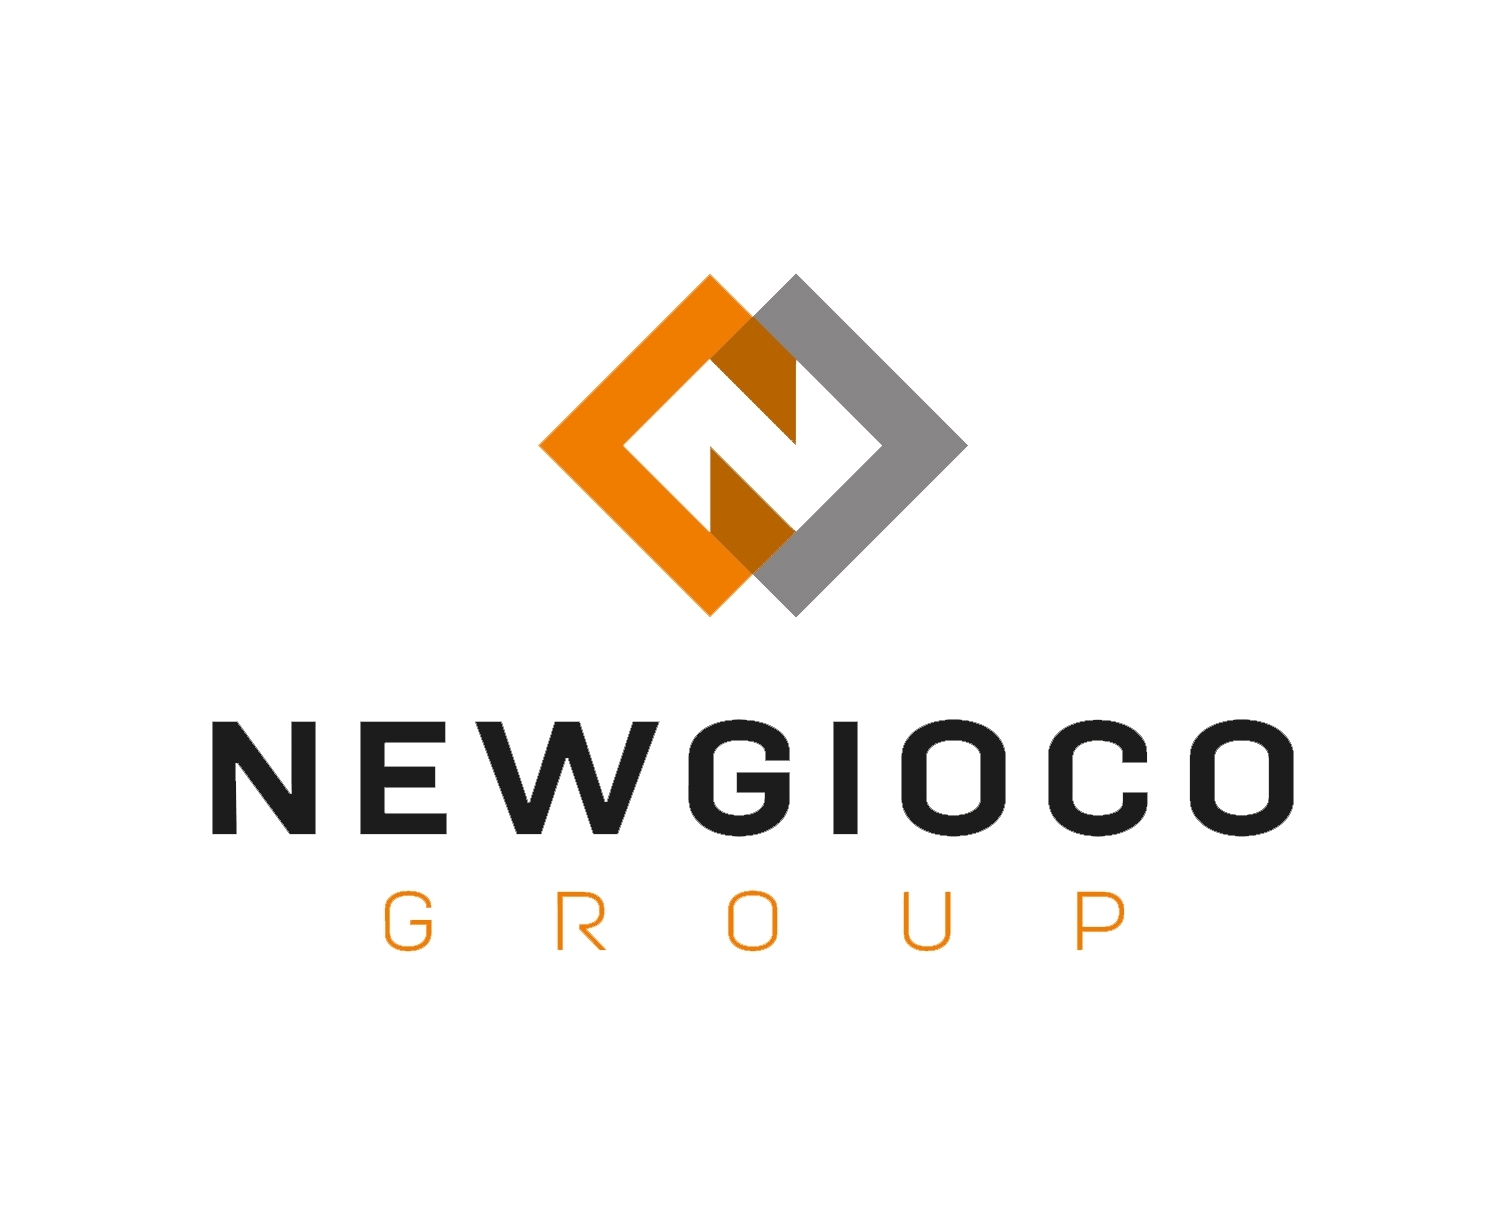 https://mms.businesswire.com/media/20200617005433/en/779190/5/NewGiocoGroup-logo-Png-Black.jpg 